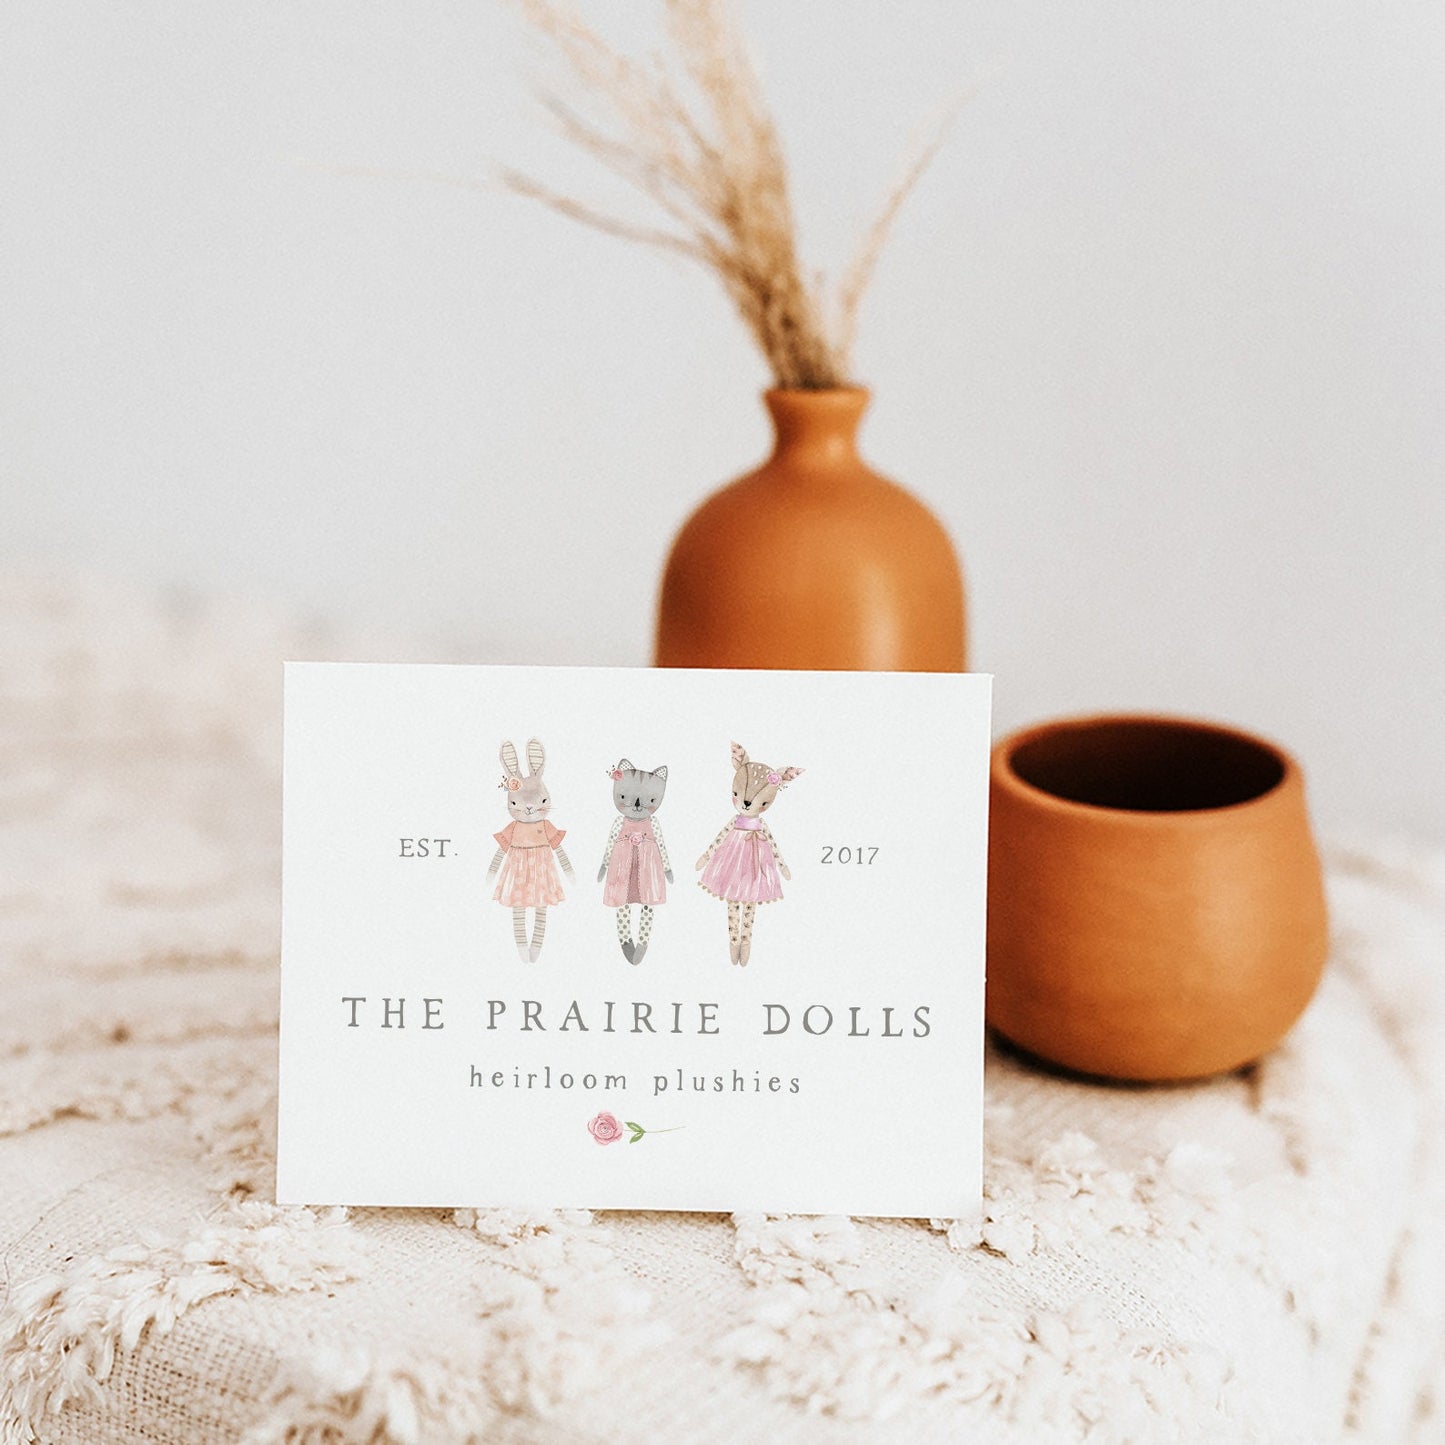 The Prairie Dolls | Premade Logo Design | Bunny, Deer, Cat, Rag Dolls